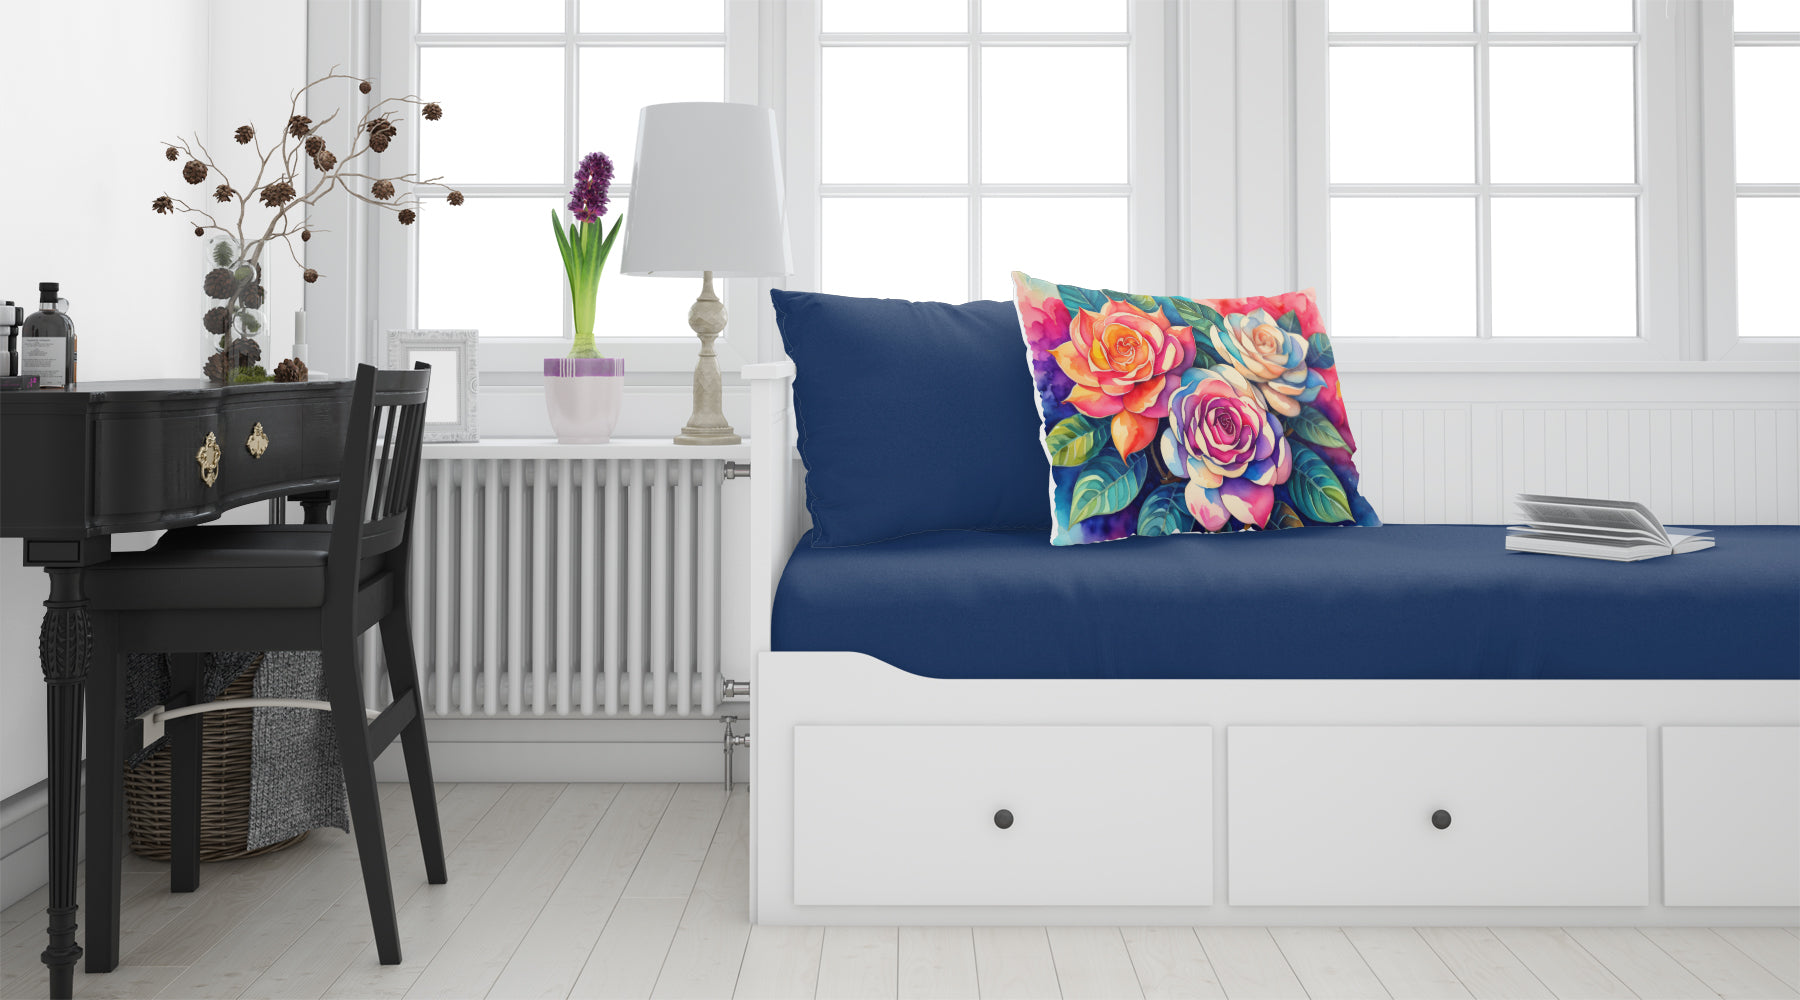 Buy this Gardenias in Color Fabric Standard Pillowcase